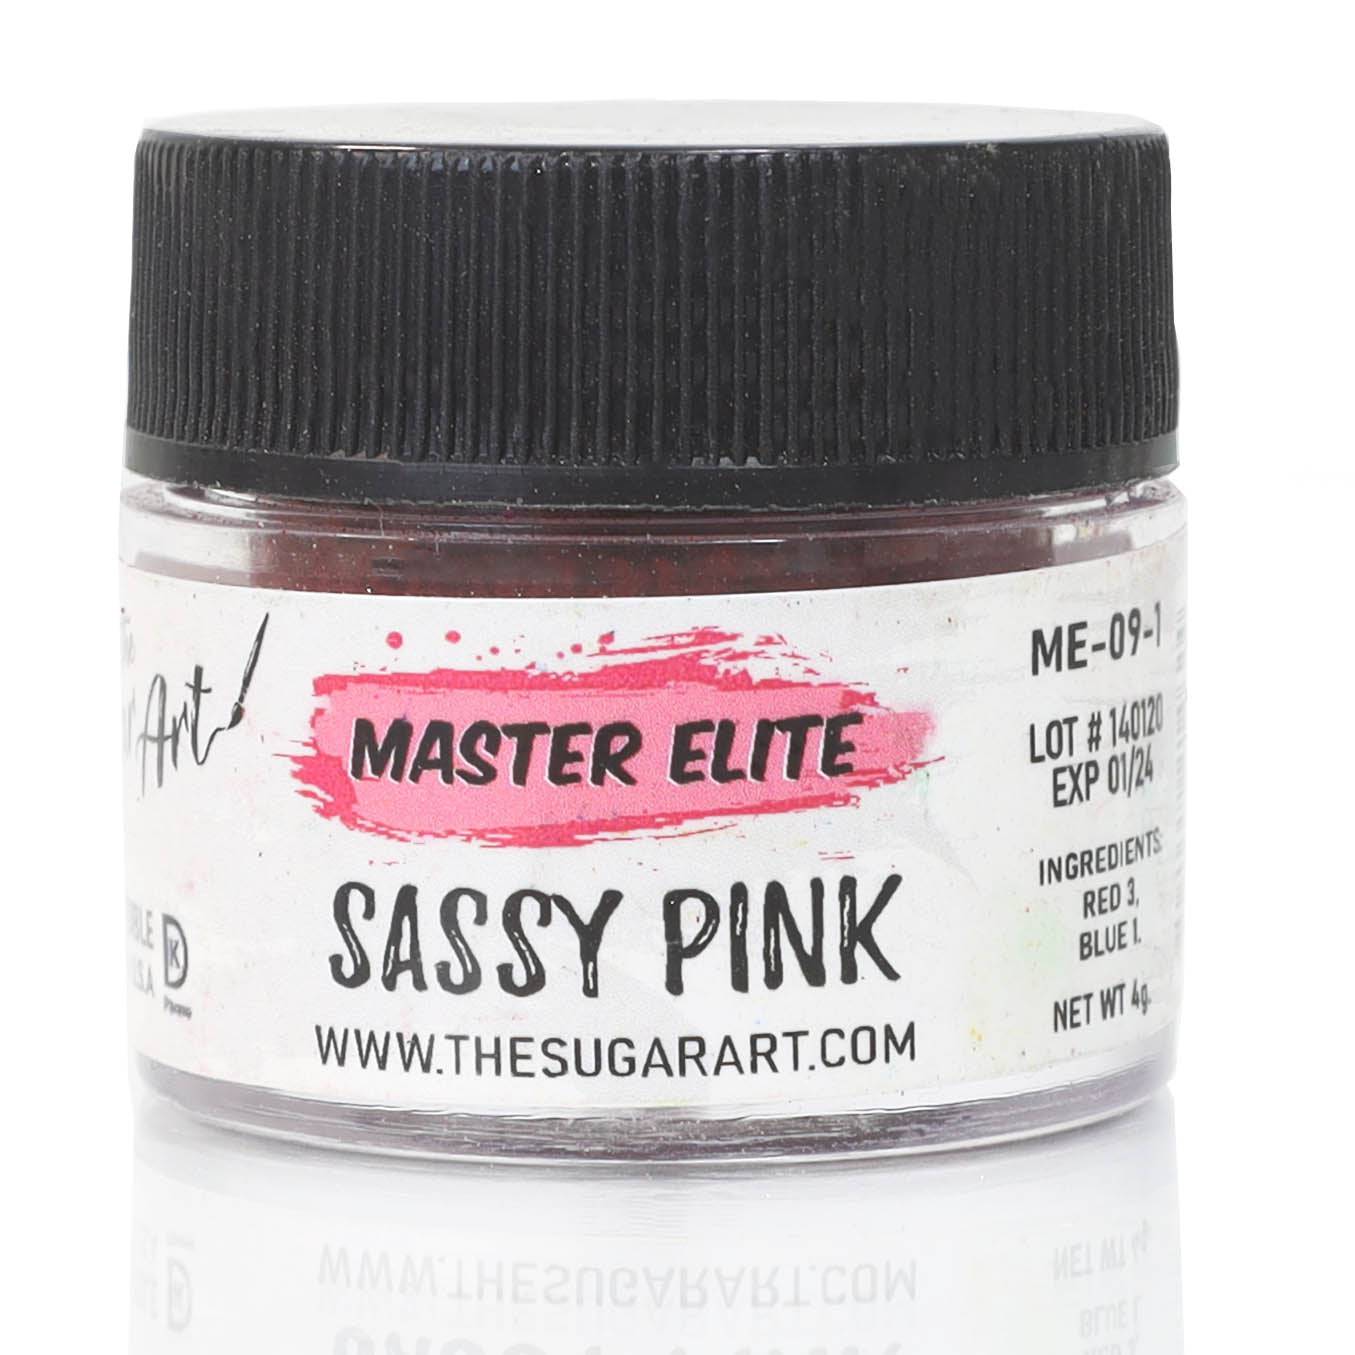 Sassy Pink Food Color - The Sugar Art, Inc.